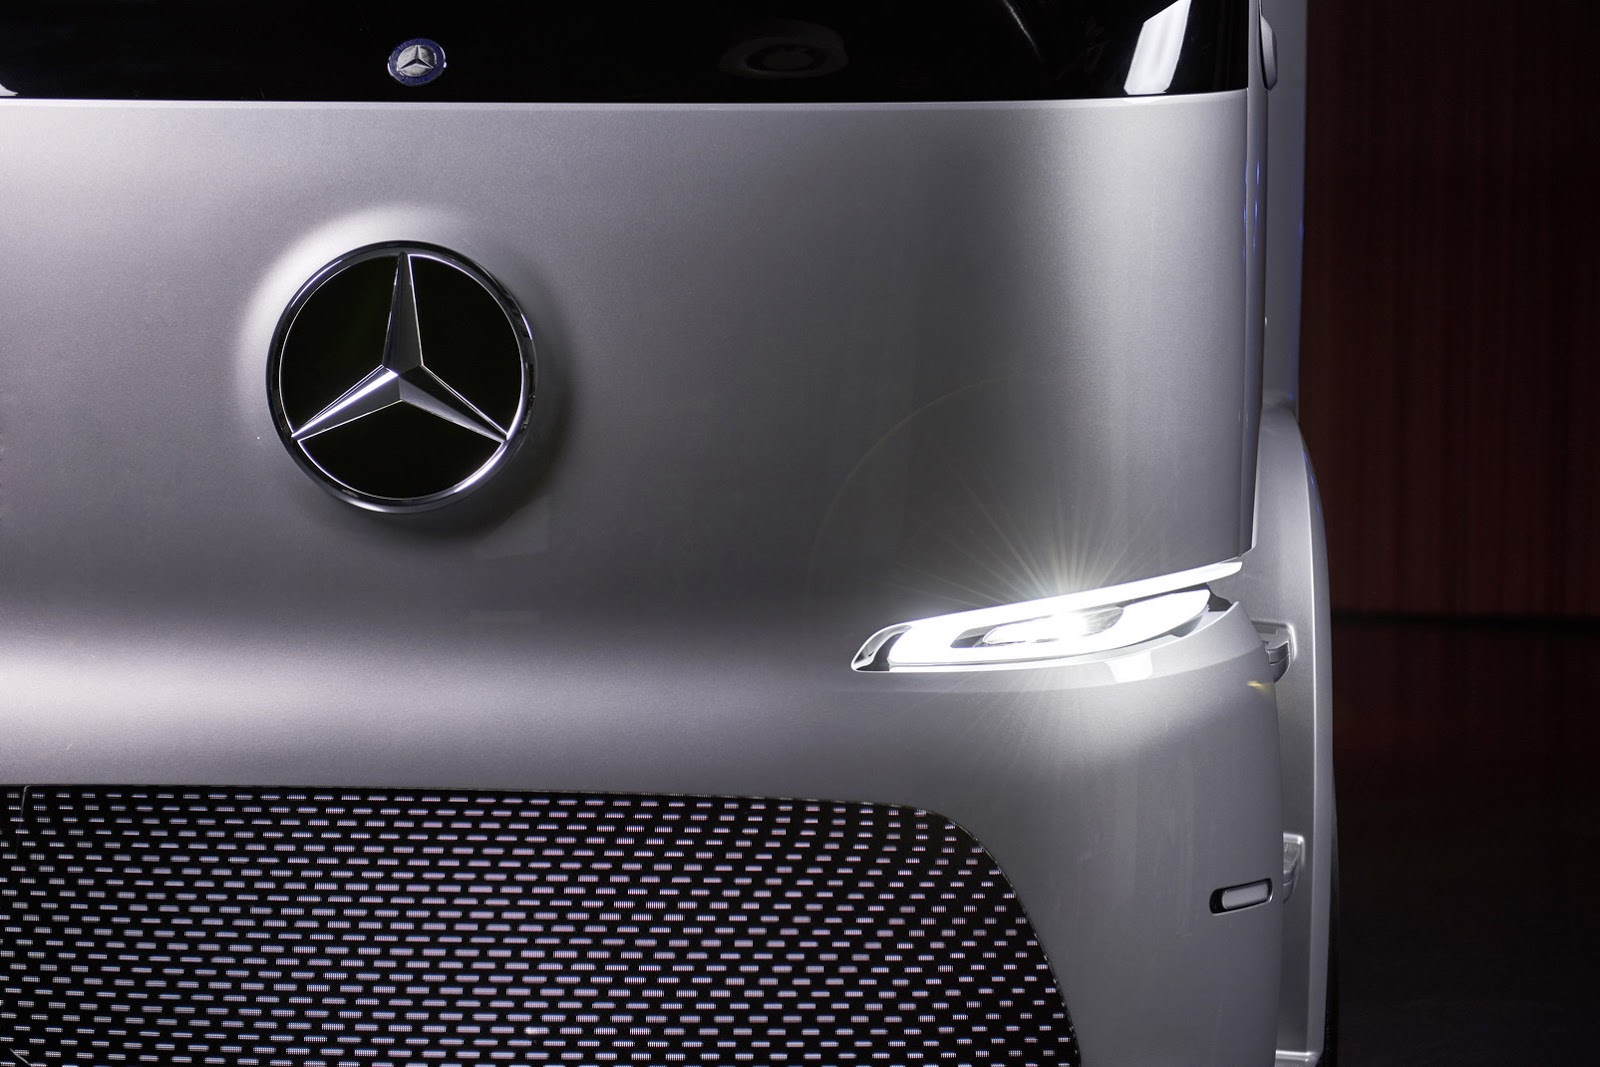 Mercedes-Benz Urban eTruck Concept, 2016